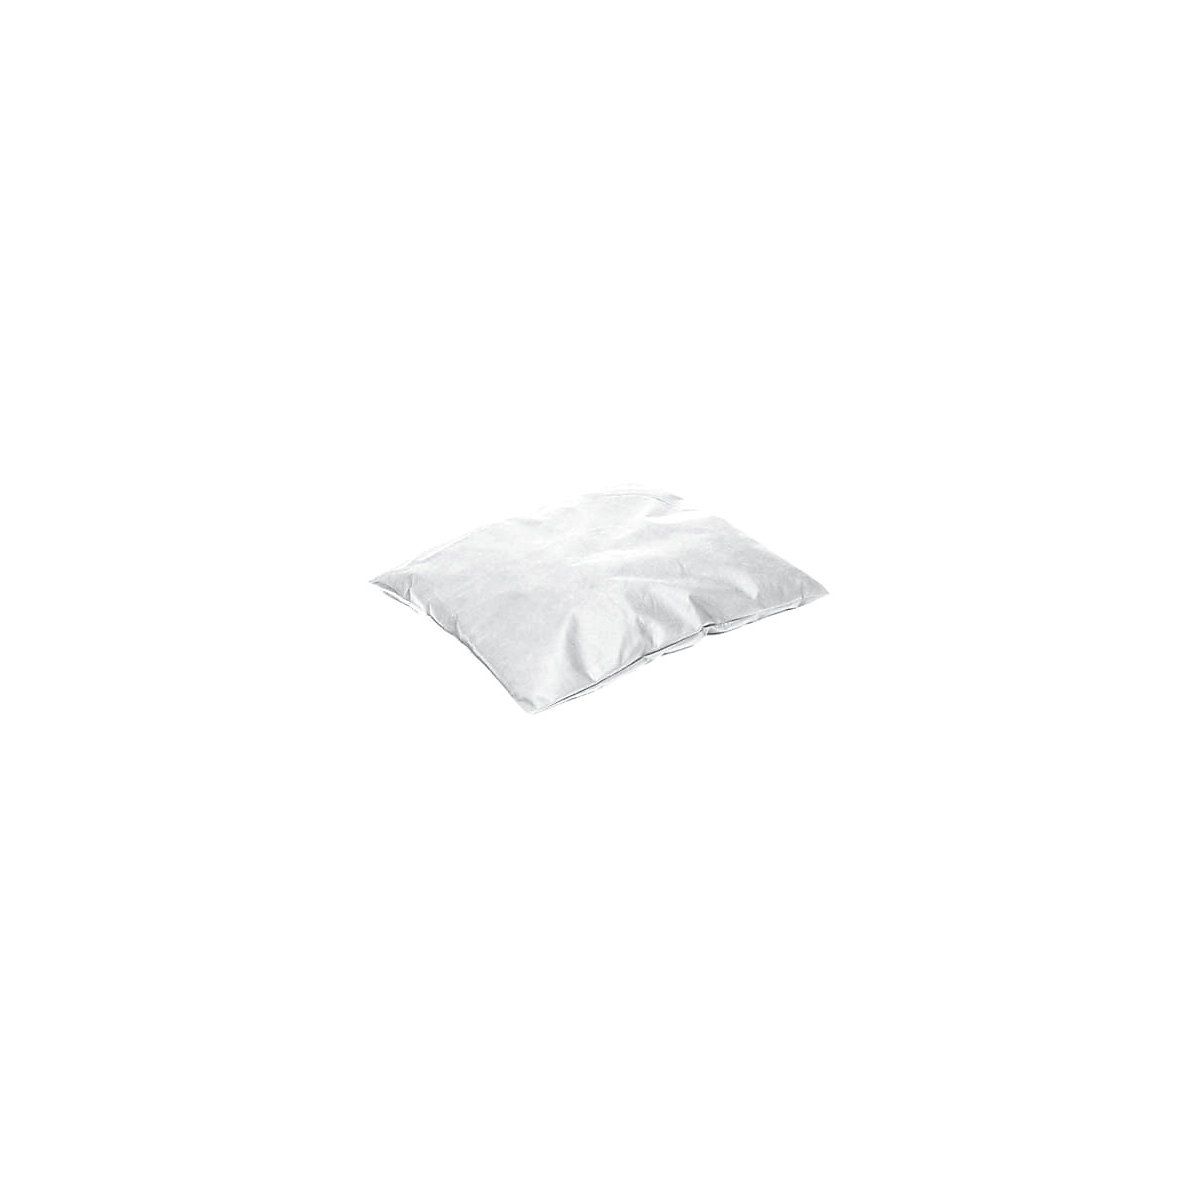 Cuscino assorbente in panno, versione a tenuta d'olio, 600 x 800 mm, bianco, conf. da 4 pz.-7